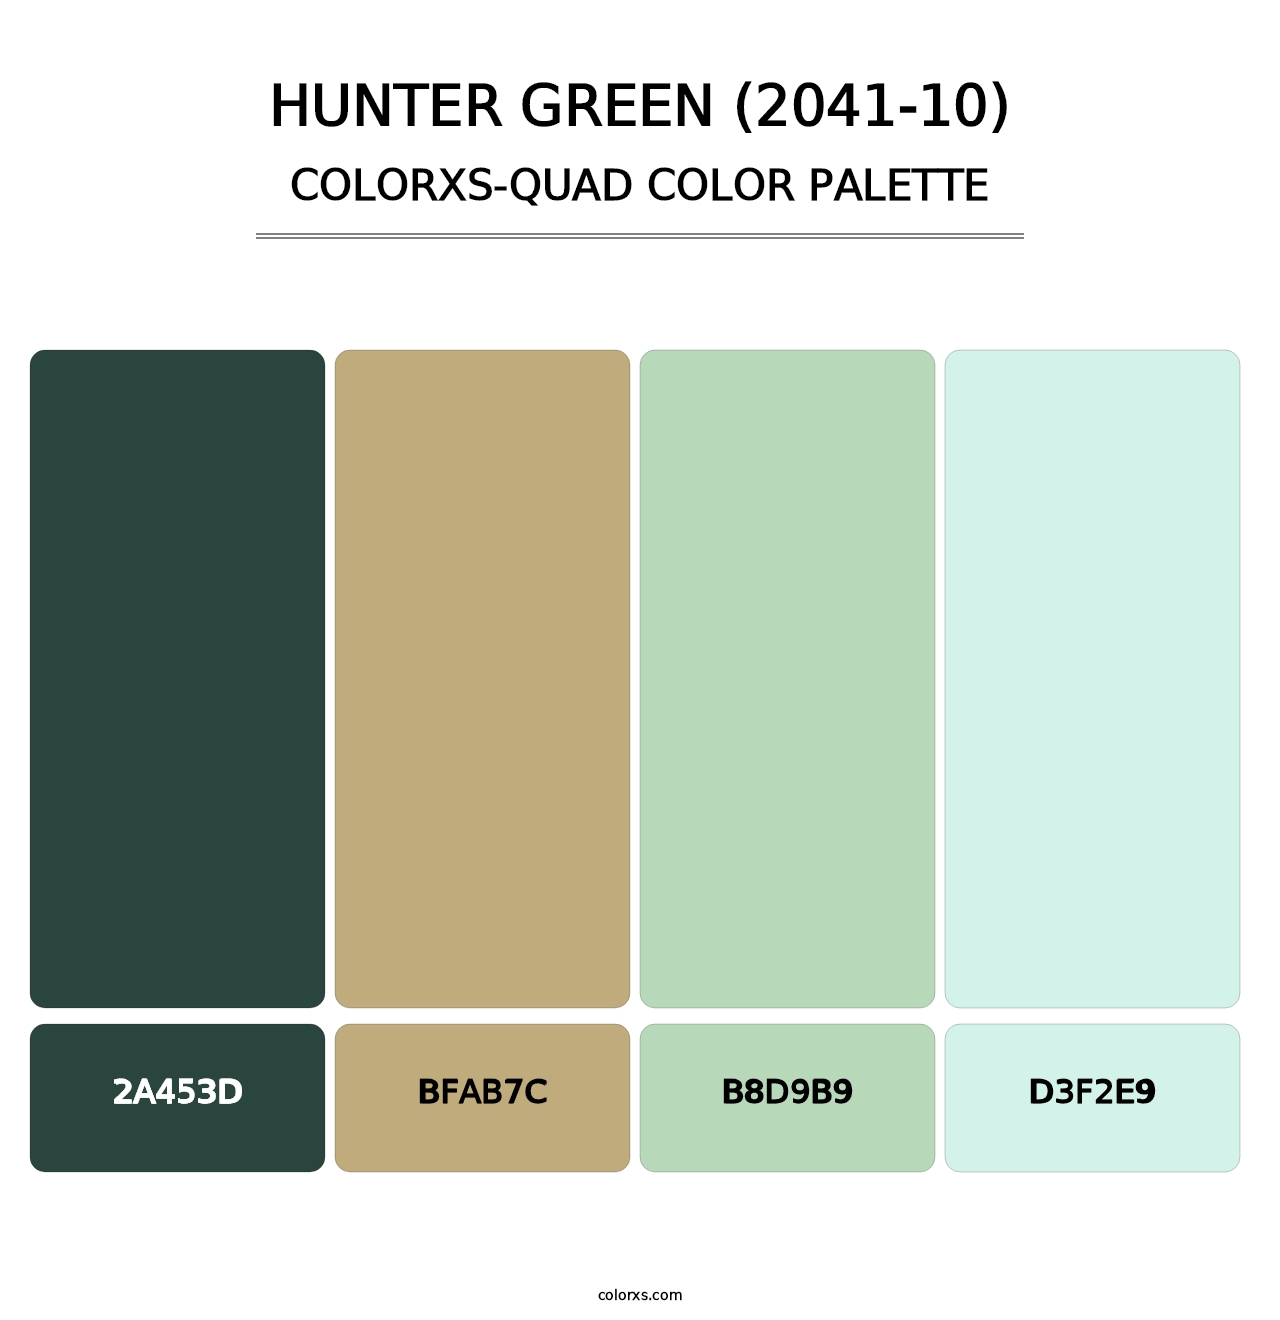 Hunter Green (2041-10) - Colorxs Quad Palette